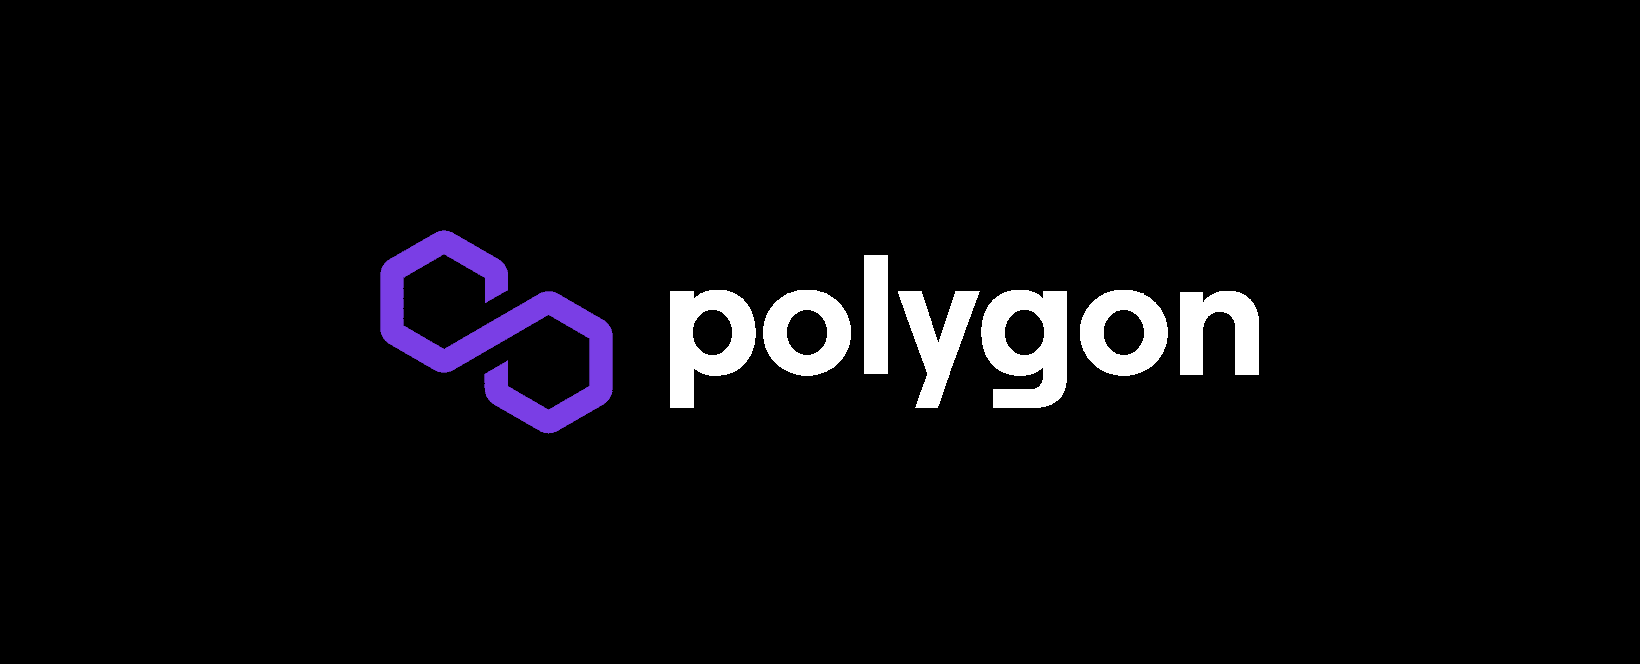 polygon network internet of blockchain ethereum l2 scaling